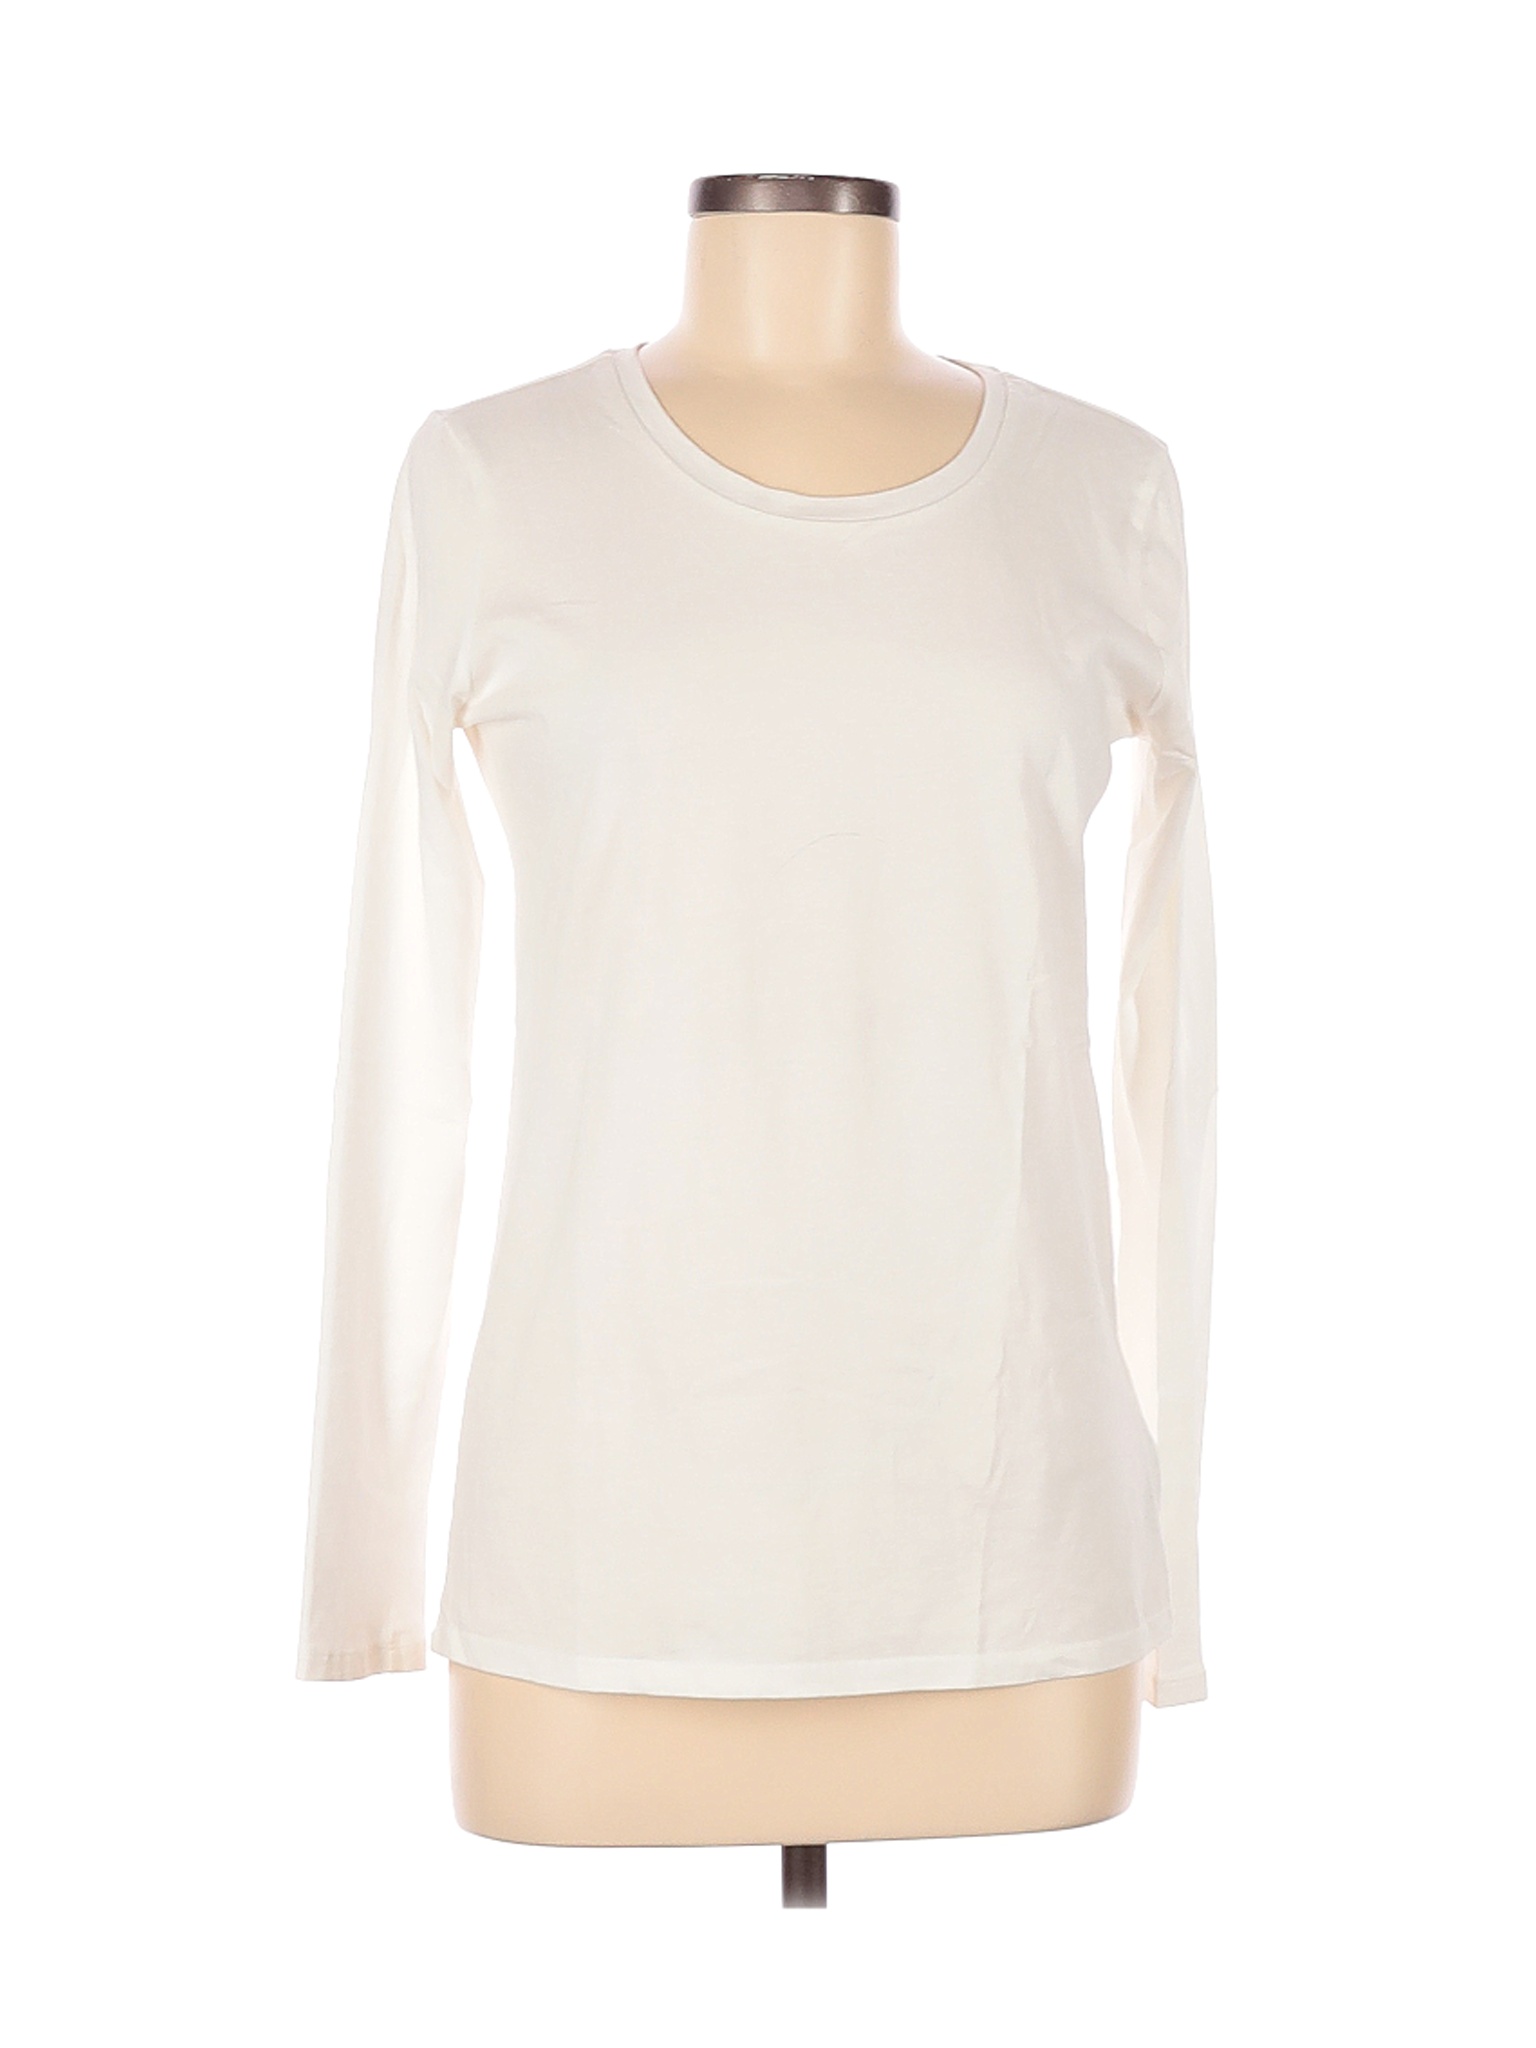 Gap Women White Long Sleeve T-Shirt S | eBay